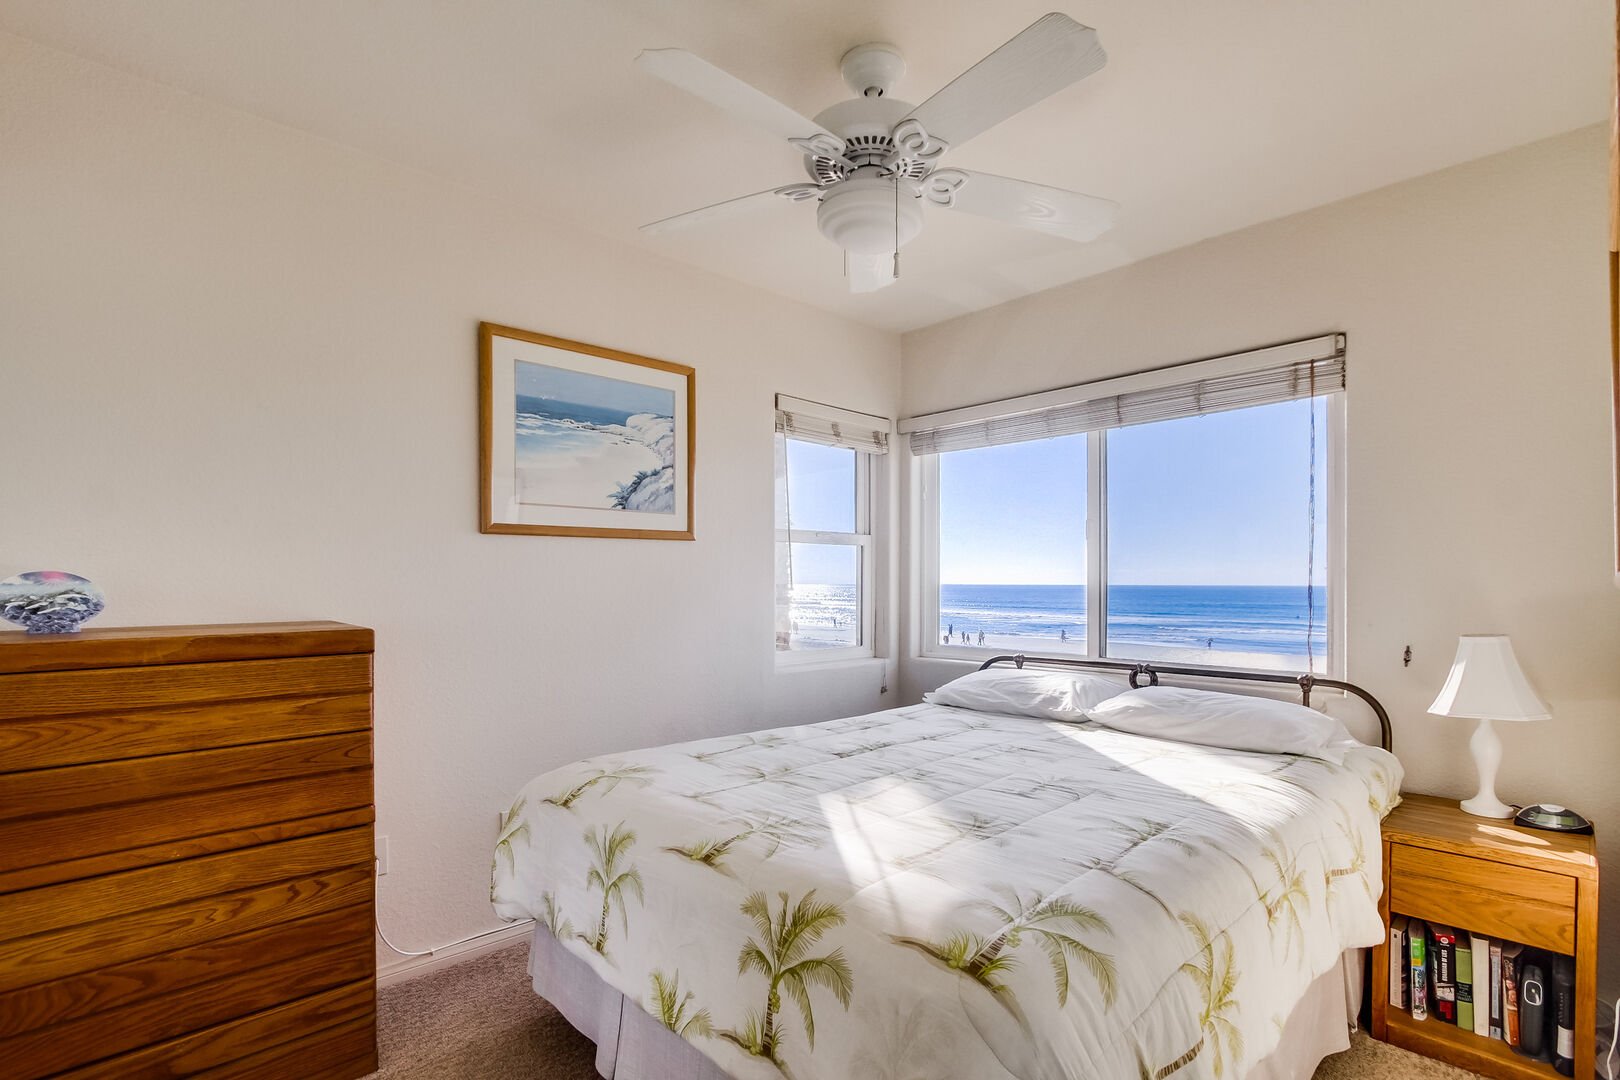 Master bedroom with queen size bed, ocean view, ceiling fan, lamp, TV